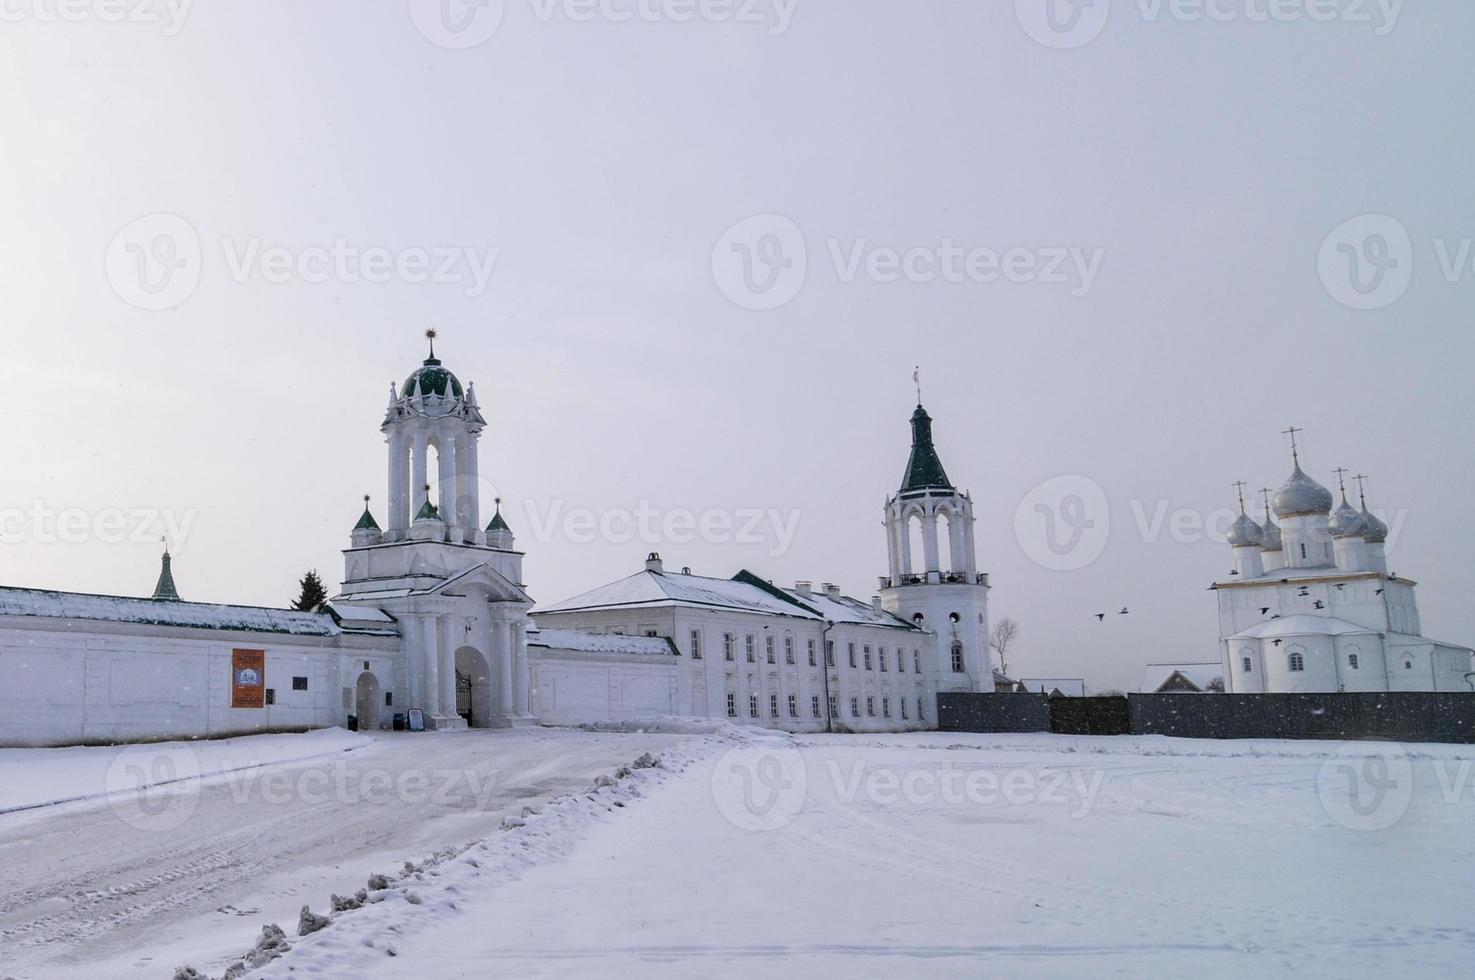 spaso-yakovlevsky kloster på de utkant av Rostov, Ryssland, längs de gyllene ringa. byggd i de neoklassiska stil. foto